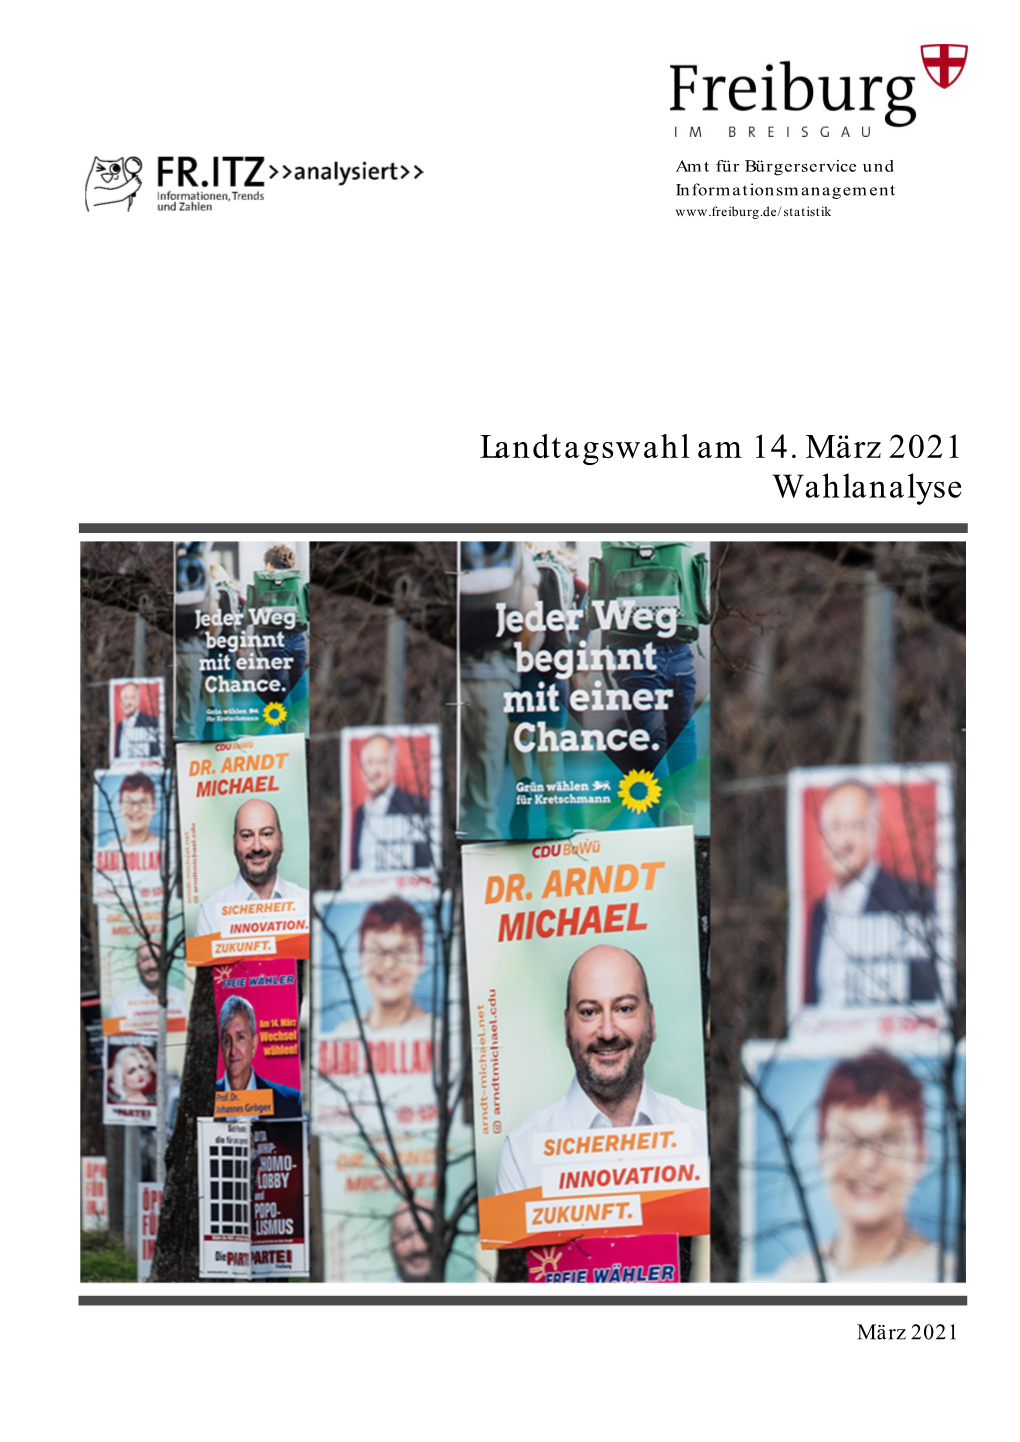 Landtagswahl Am 14. März 2021 Wahlanalyse